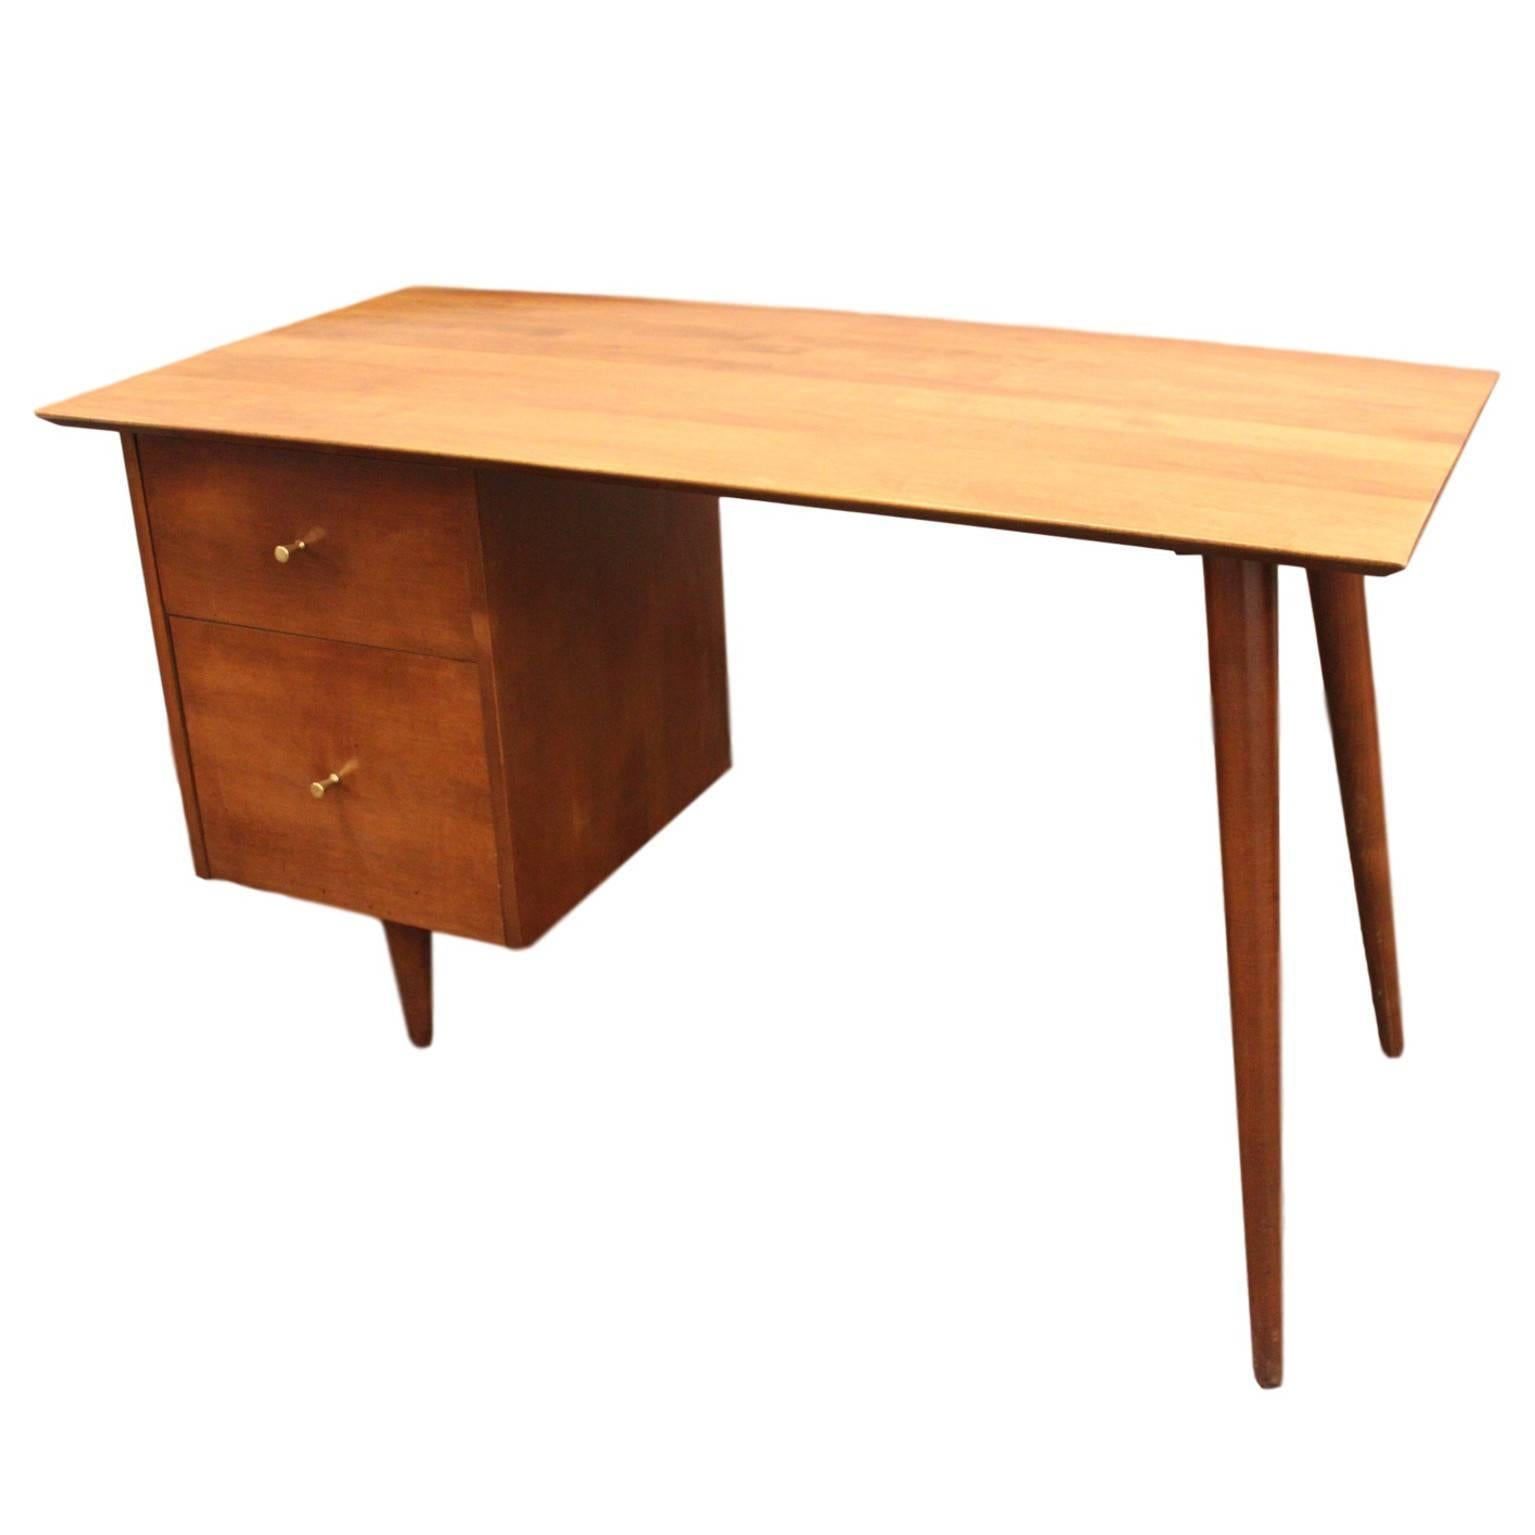 Original 1950s Mid-Century Modern Desk by Paul McCobb for Planner Group